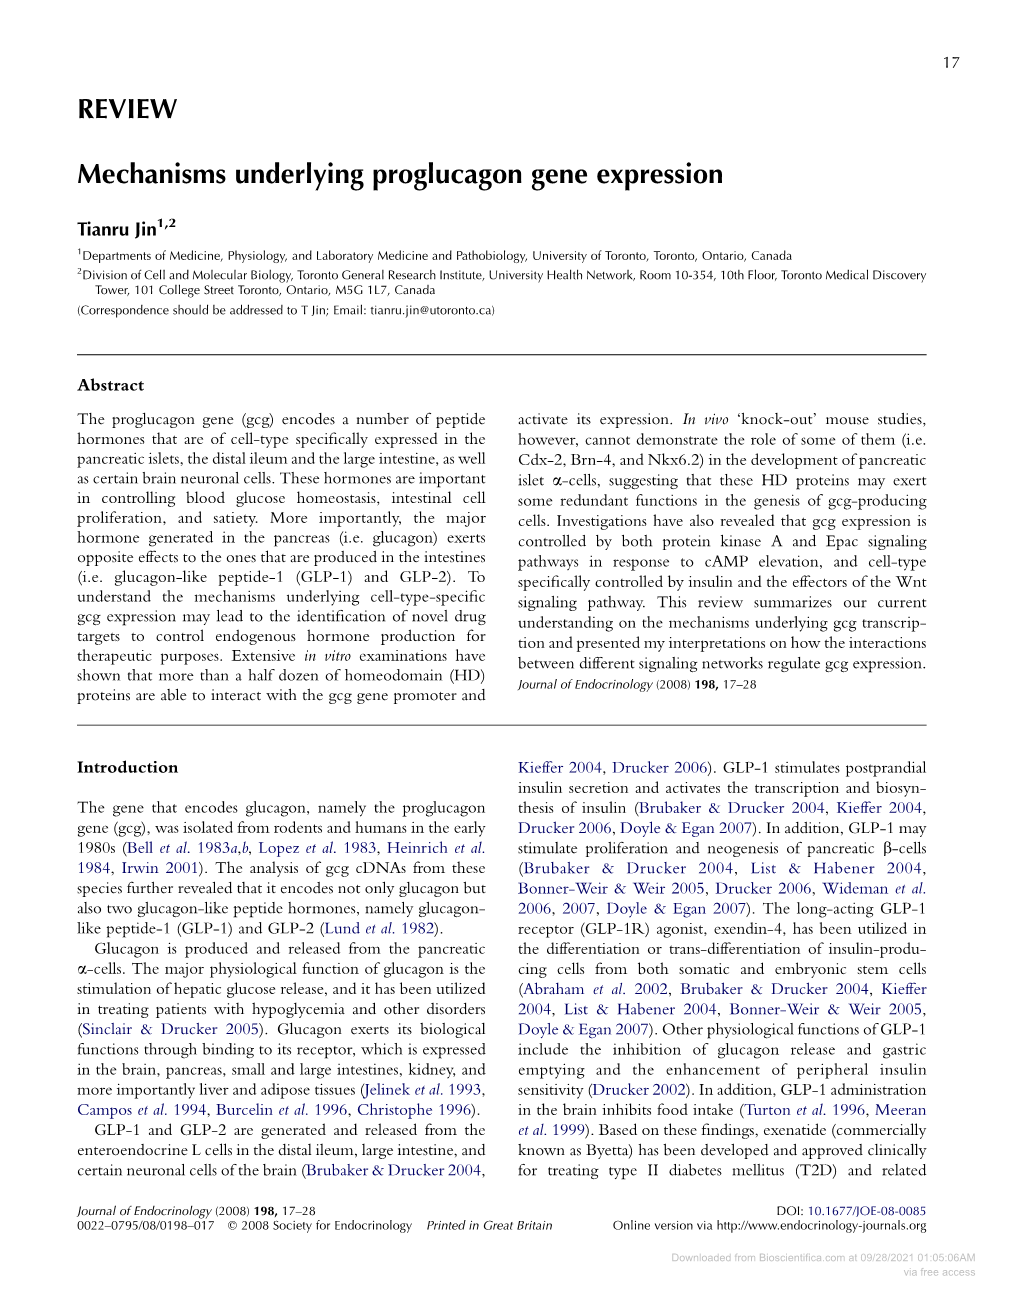 REVIEW Mechanisms Underlying Proglucagon Gene Expression